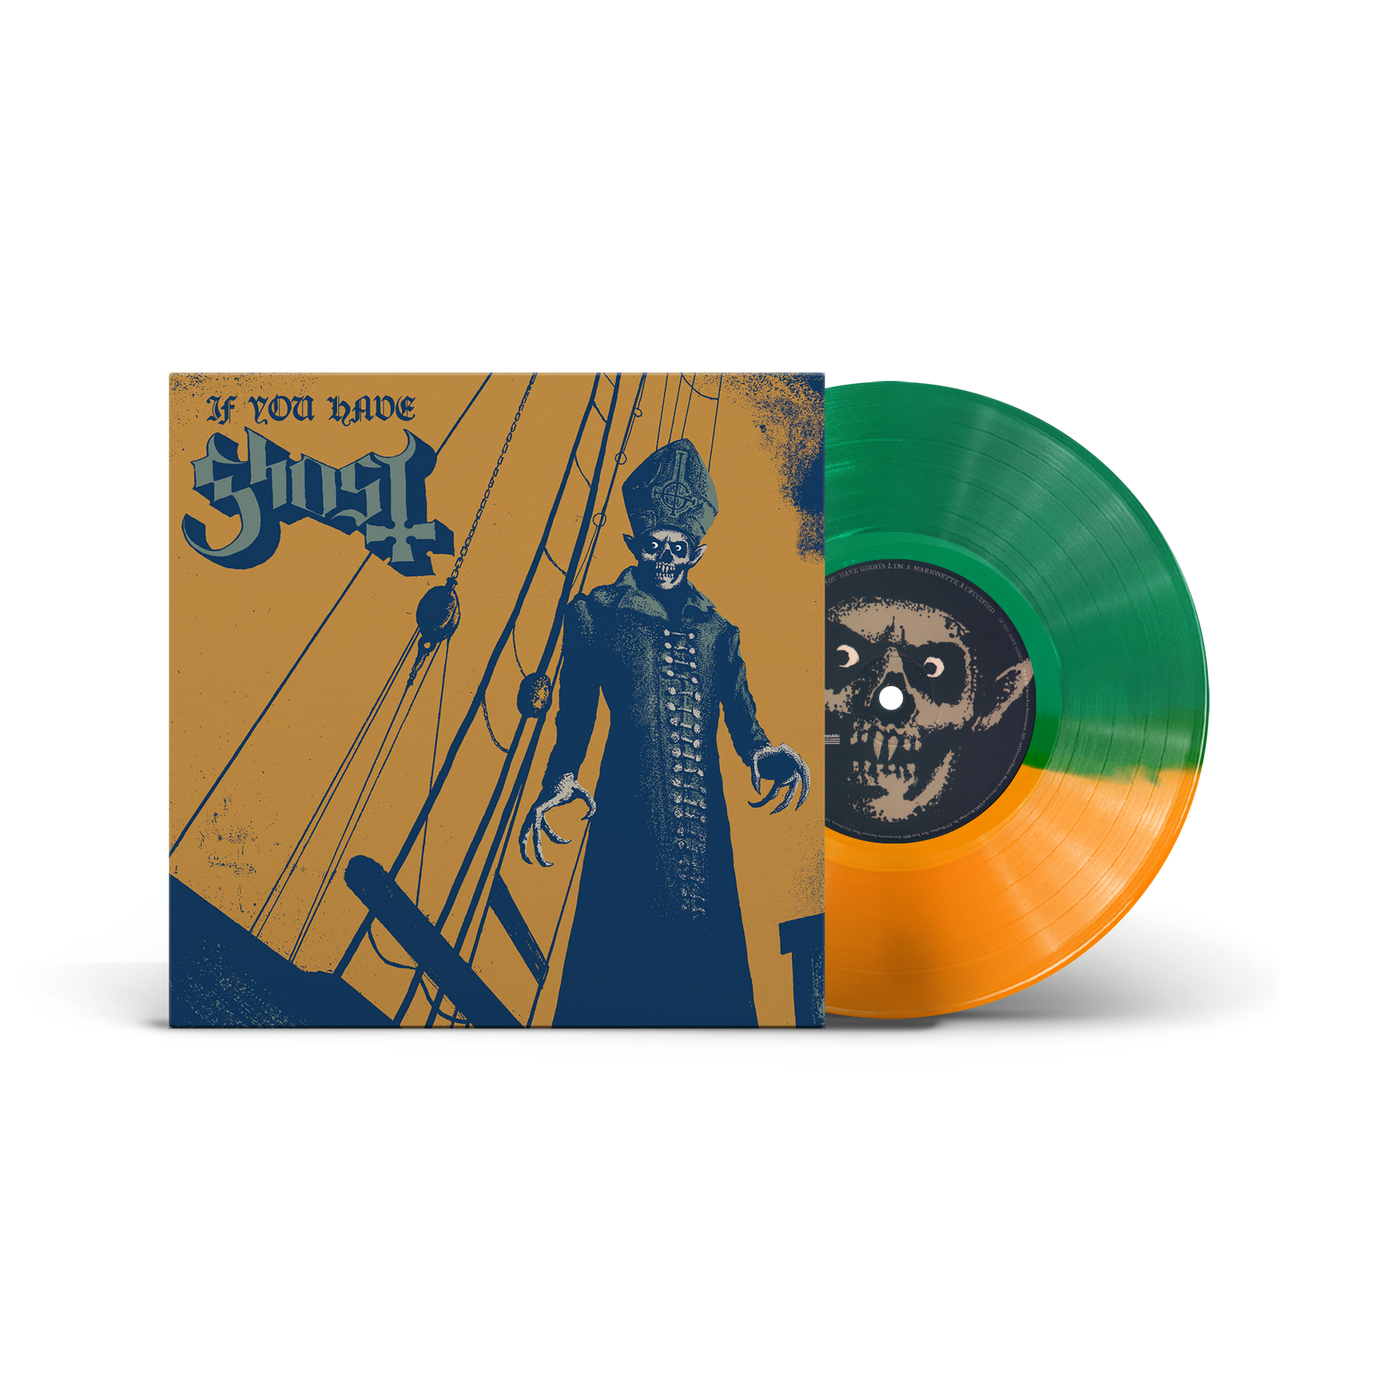 If You Have Ghost Translucent Green + Orange Vinyl (Ltd Edition Color Repress)